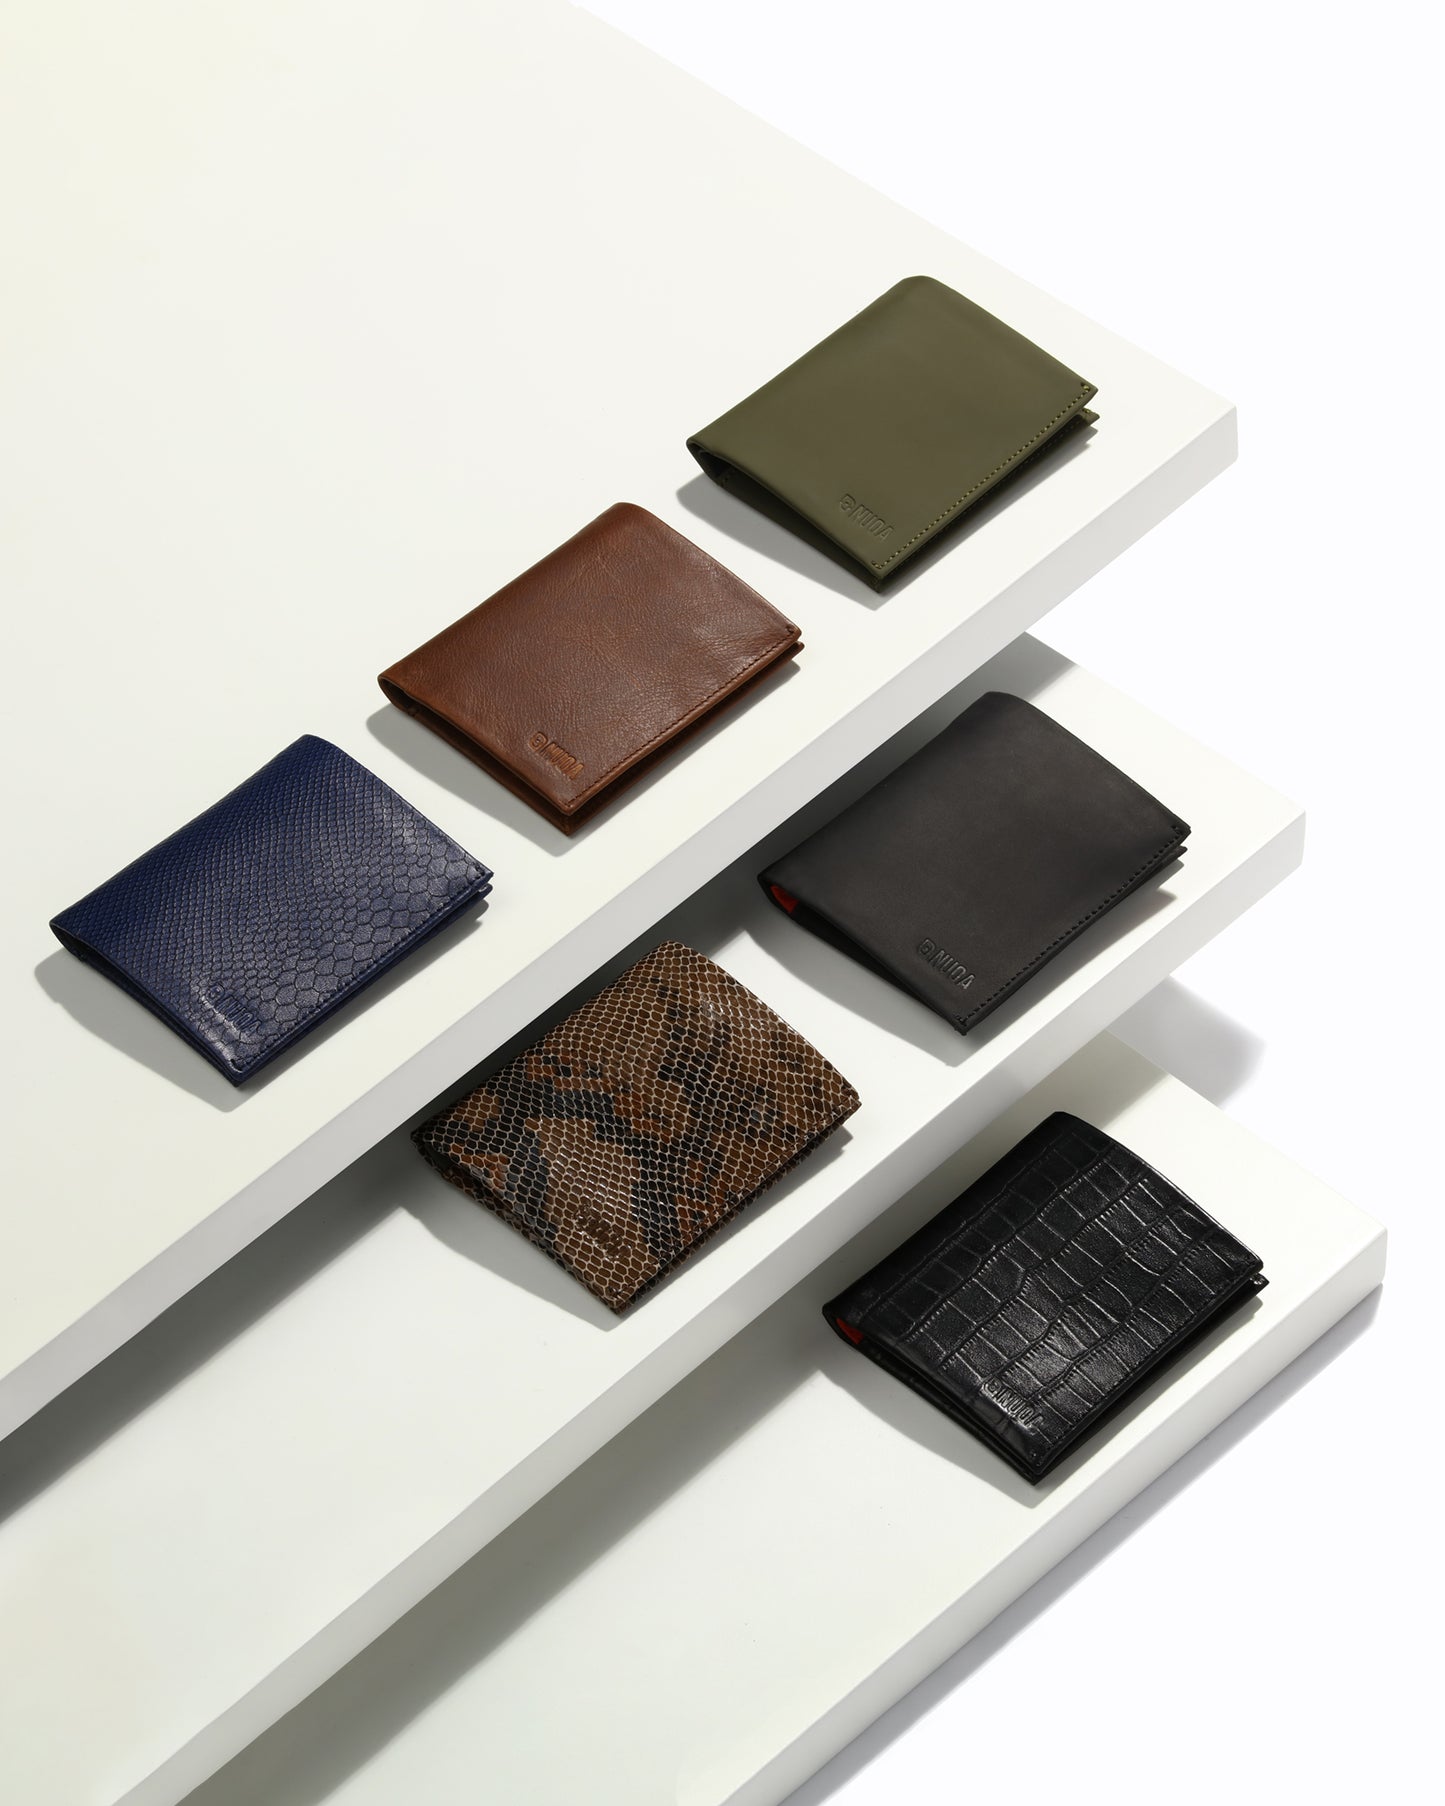 Slim Leather Wallet - Olivo/Negro